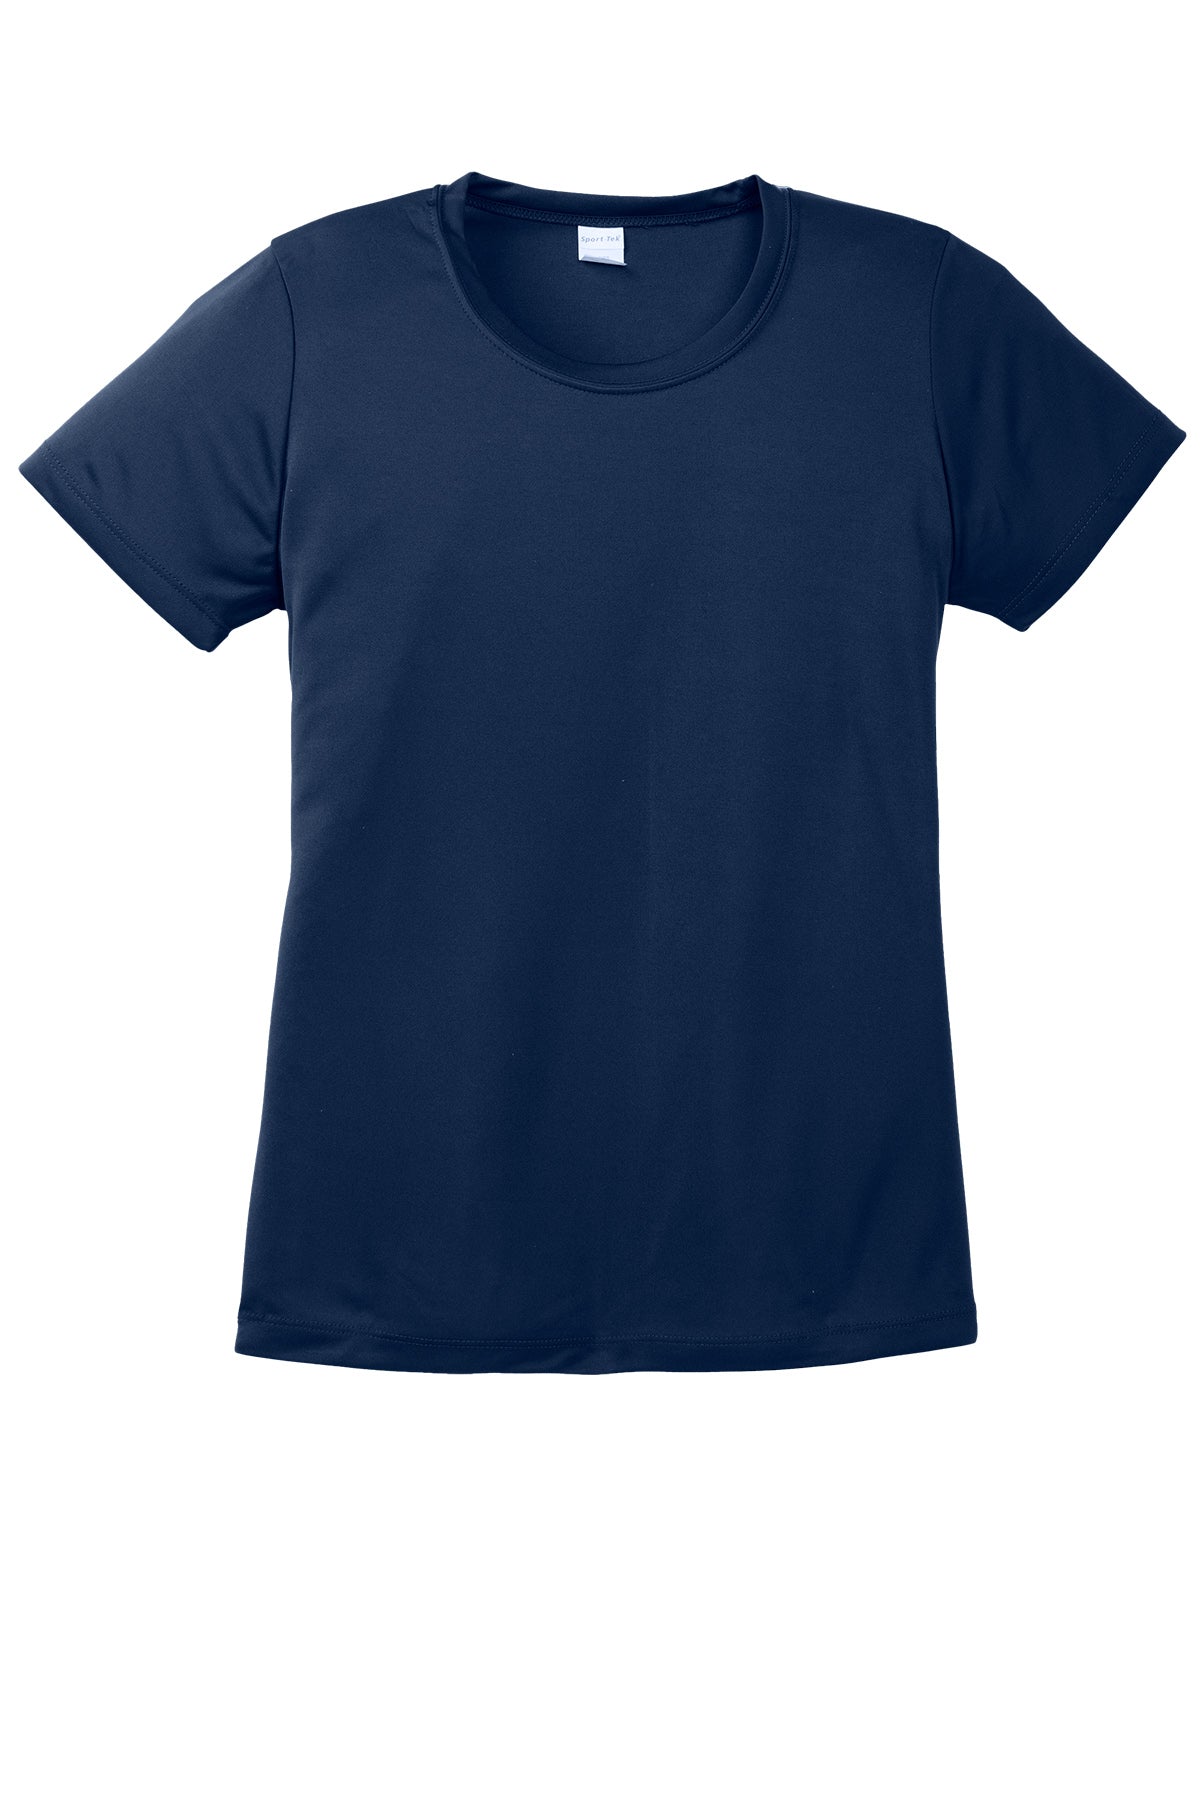 Sport-Tek Lst350 Polyester Ladies T-Shirt Ad Small / True Navy